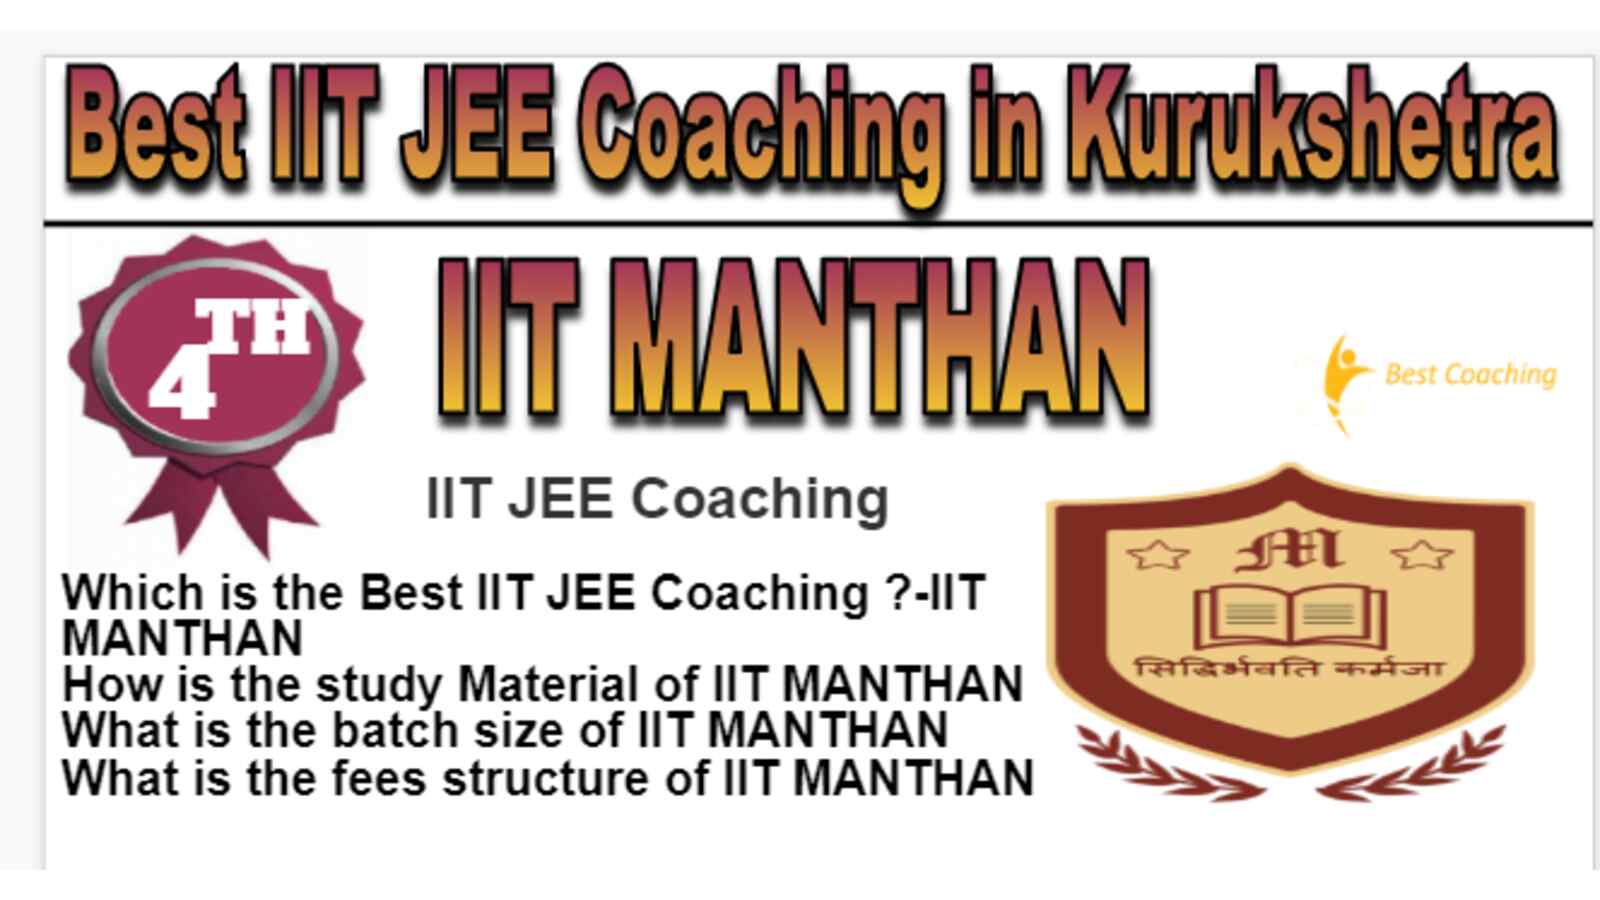 Rank 4 Best IIT JEE Coaching in Kurukshetra